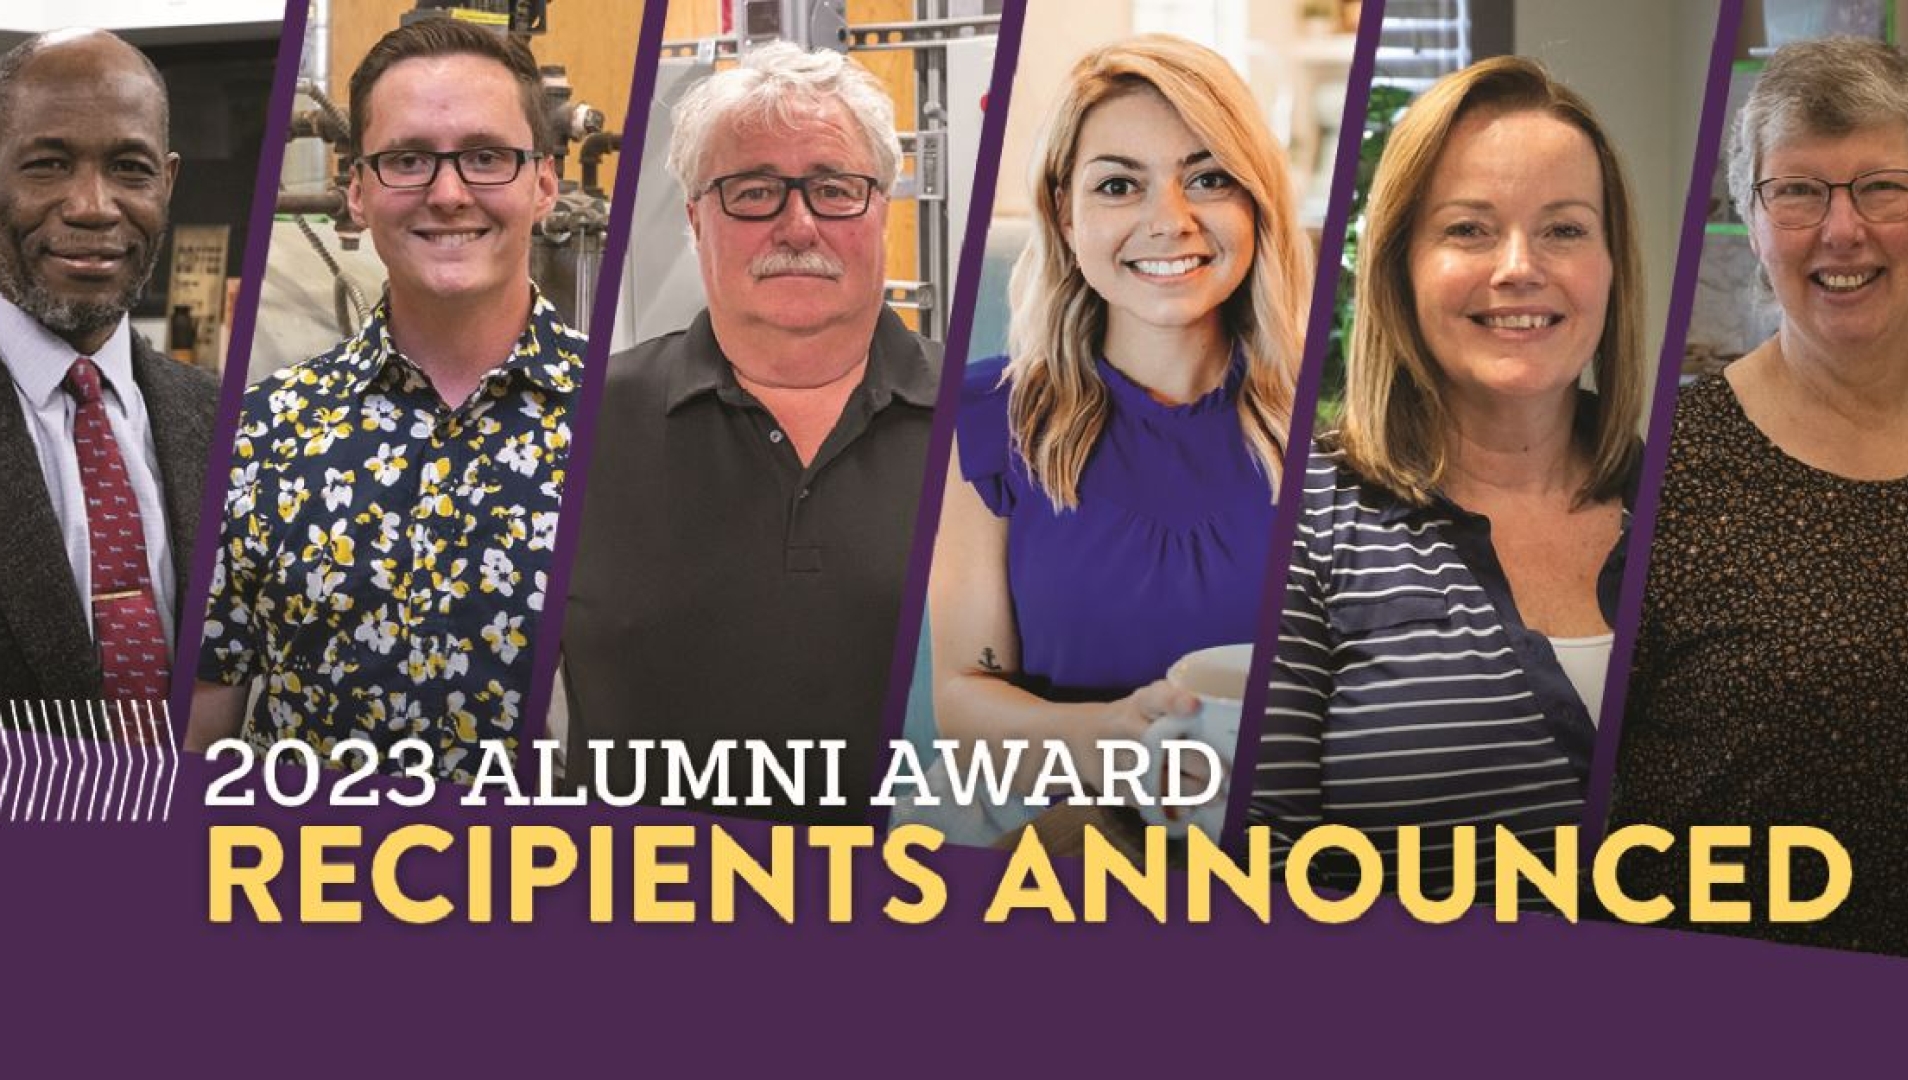 Alumni Award Recipients 2023 - Brandon Region